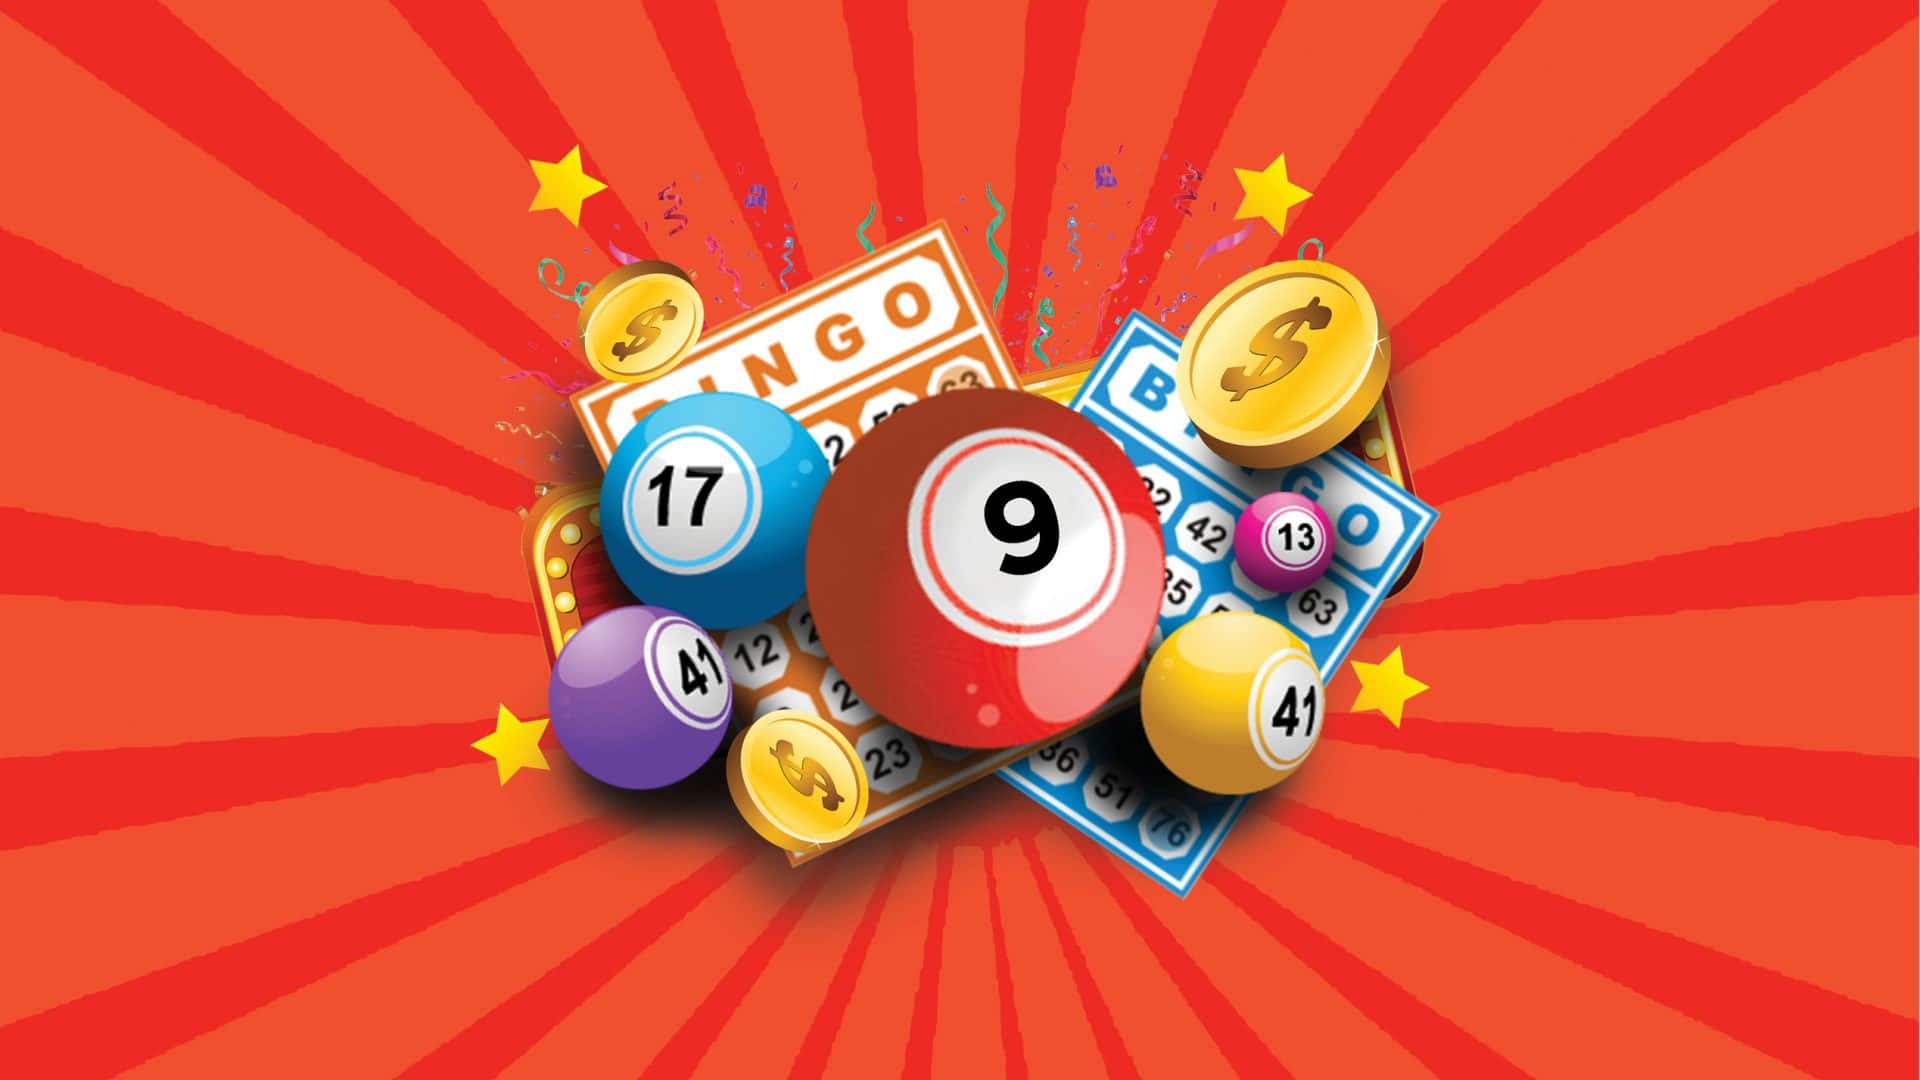 Bingo Balls And Coins On An Orange Background